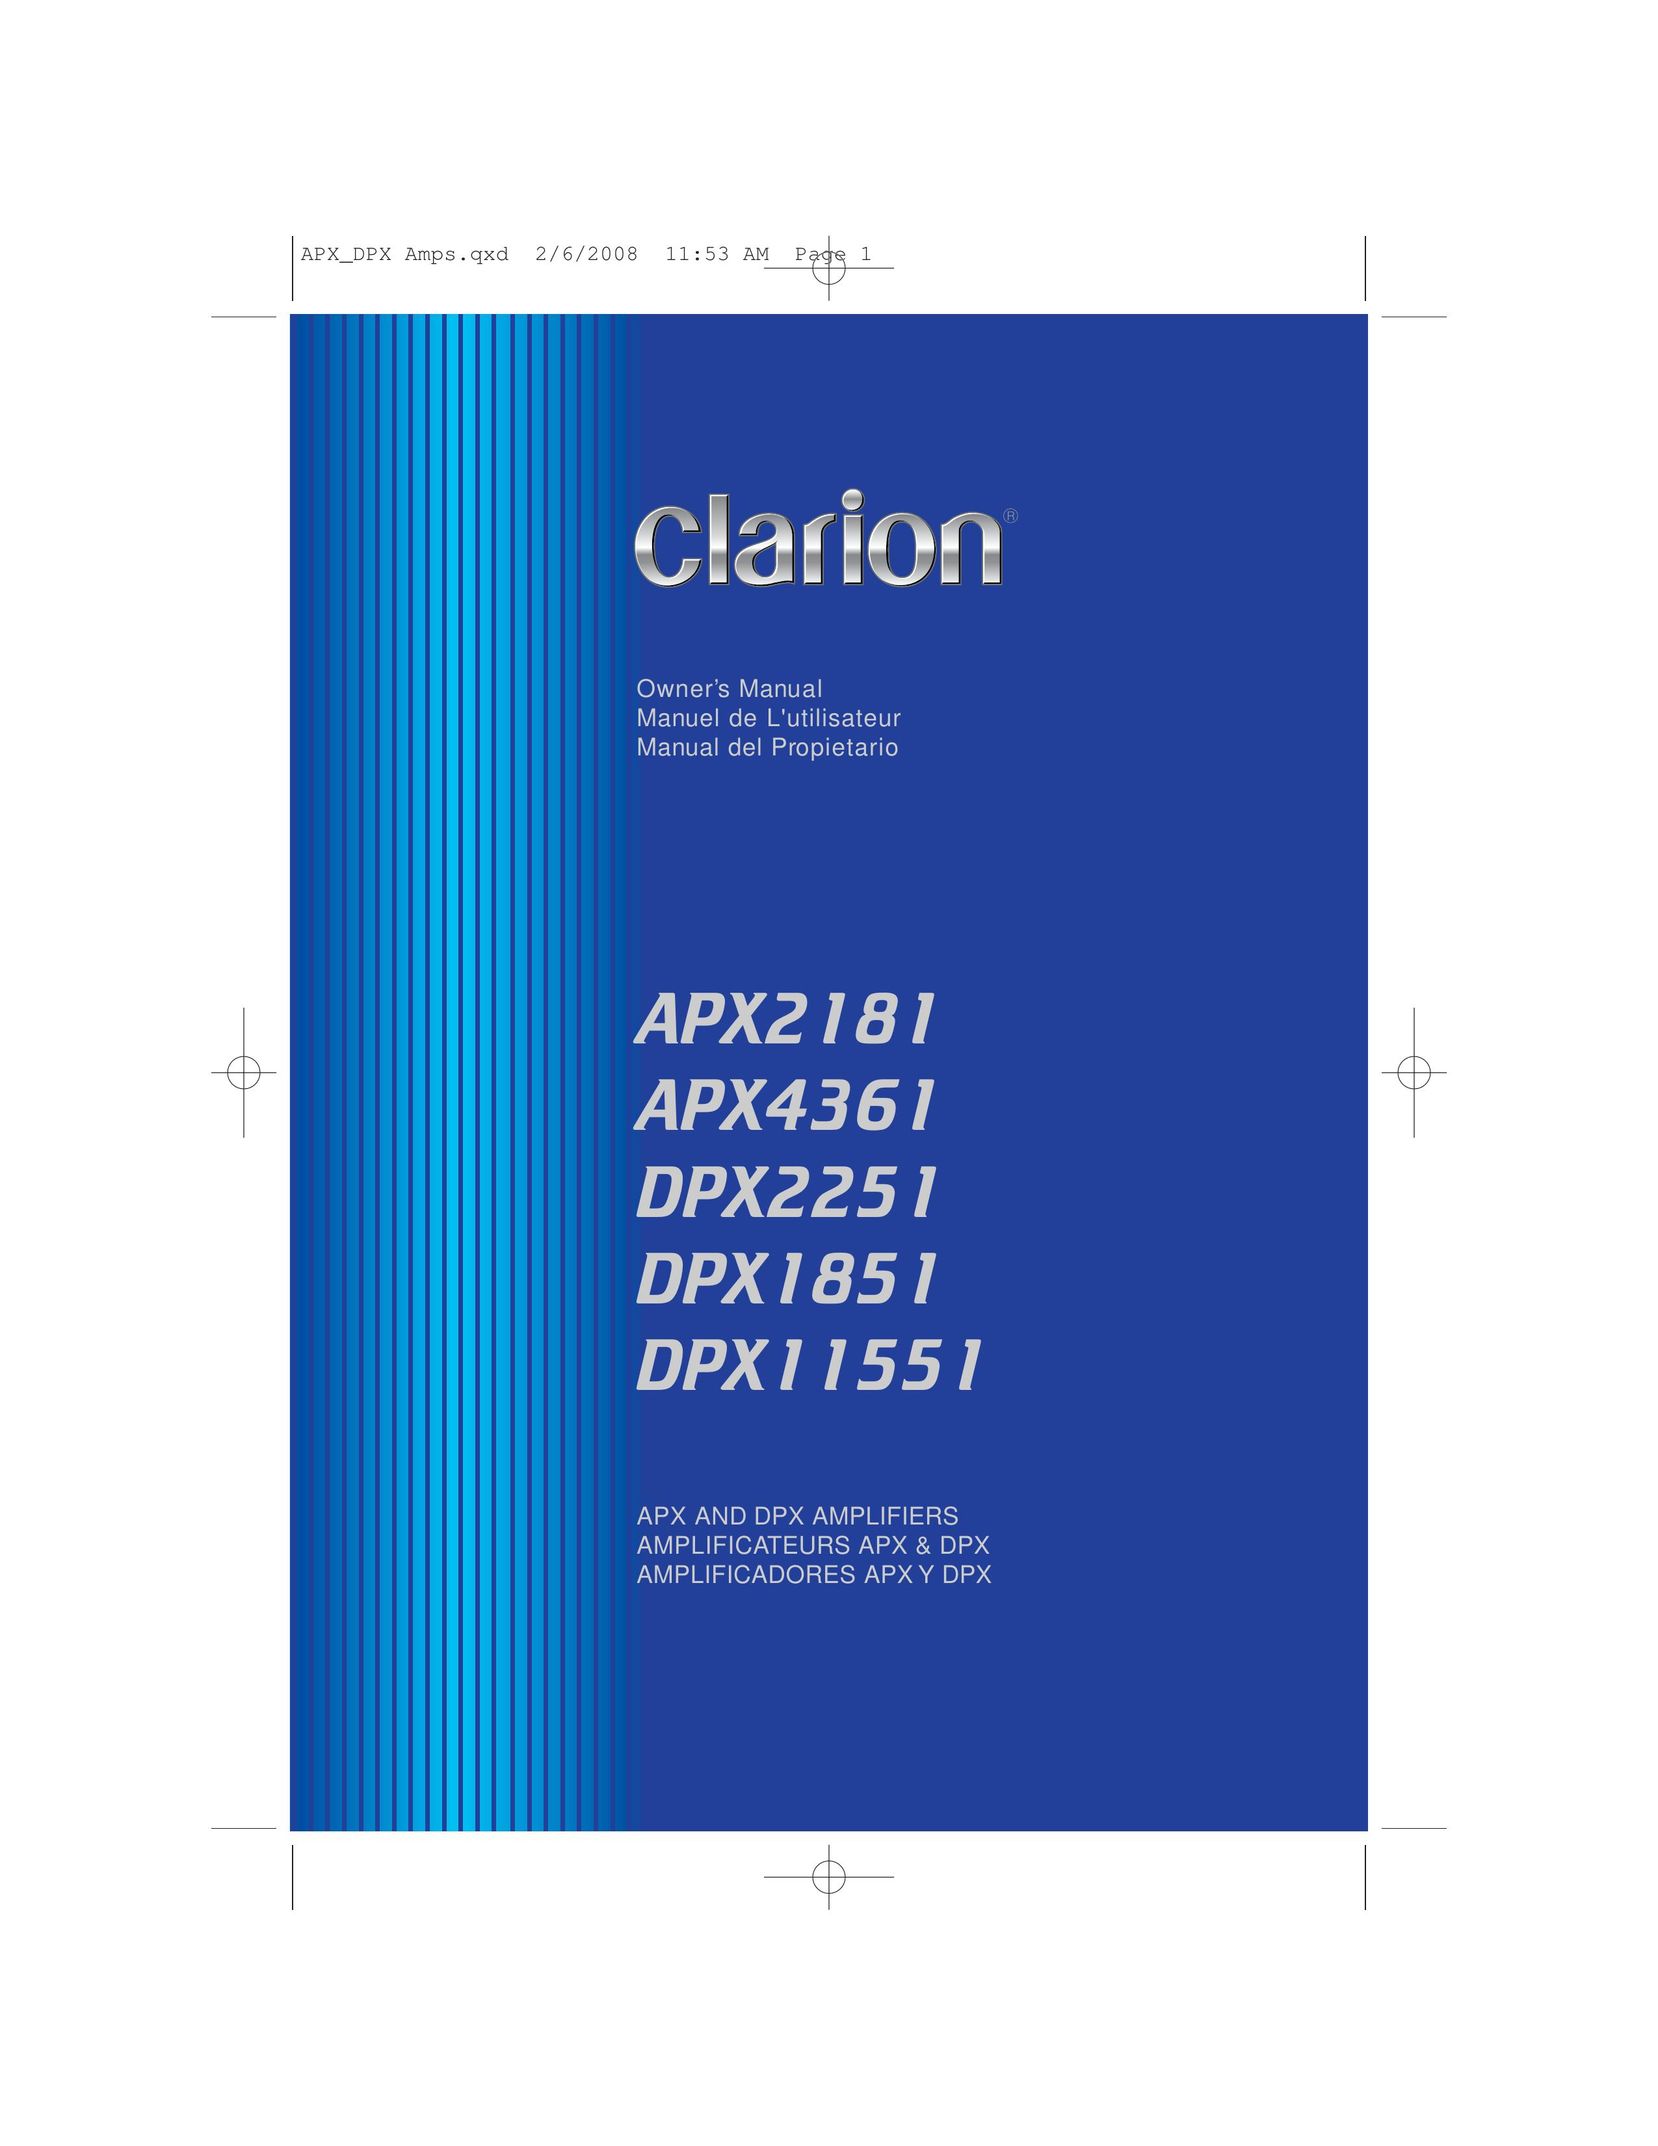 Clarion DPX11551 Car Amplifier User Manual